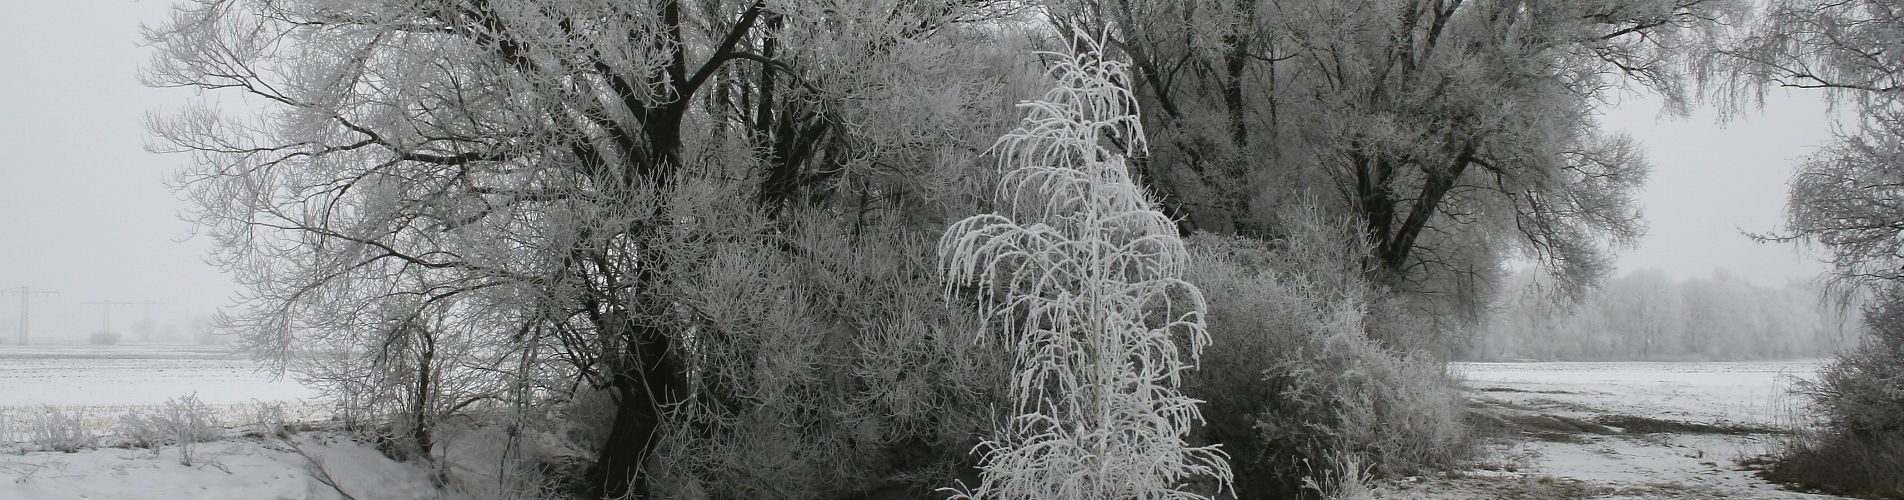 Seasonal affective disorder - snowy, gray scene of a large tree